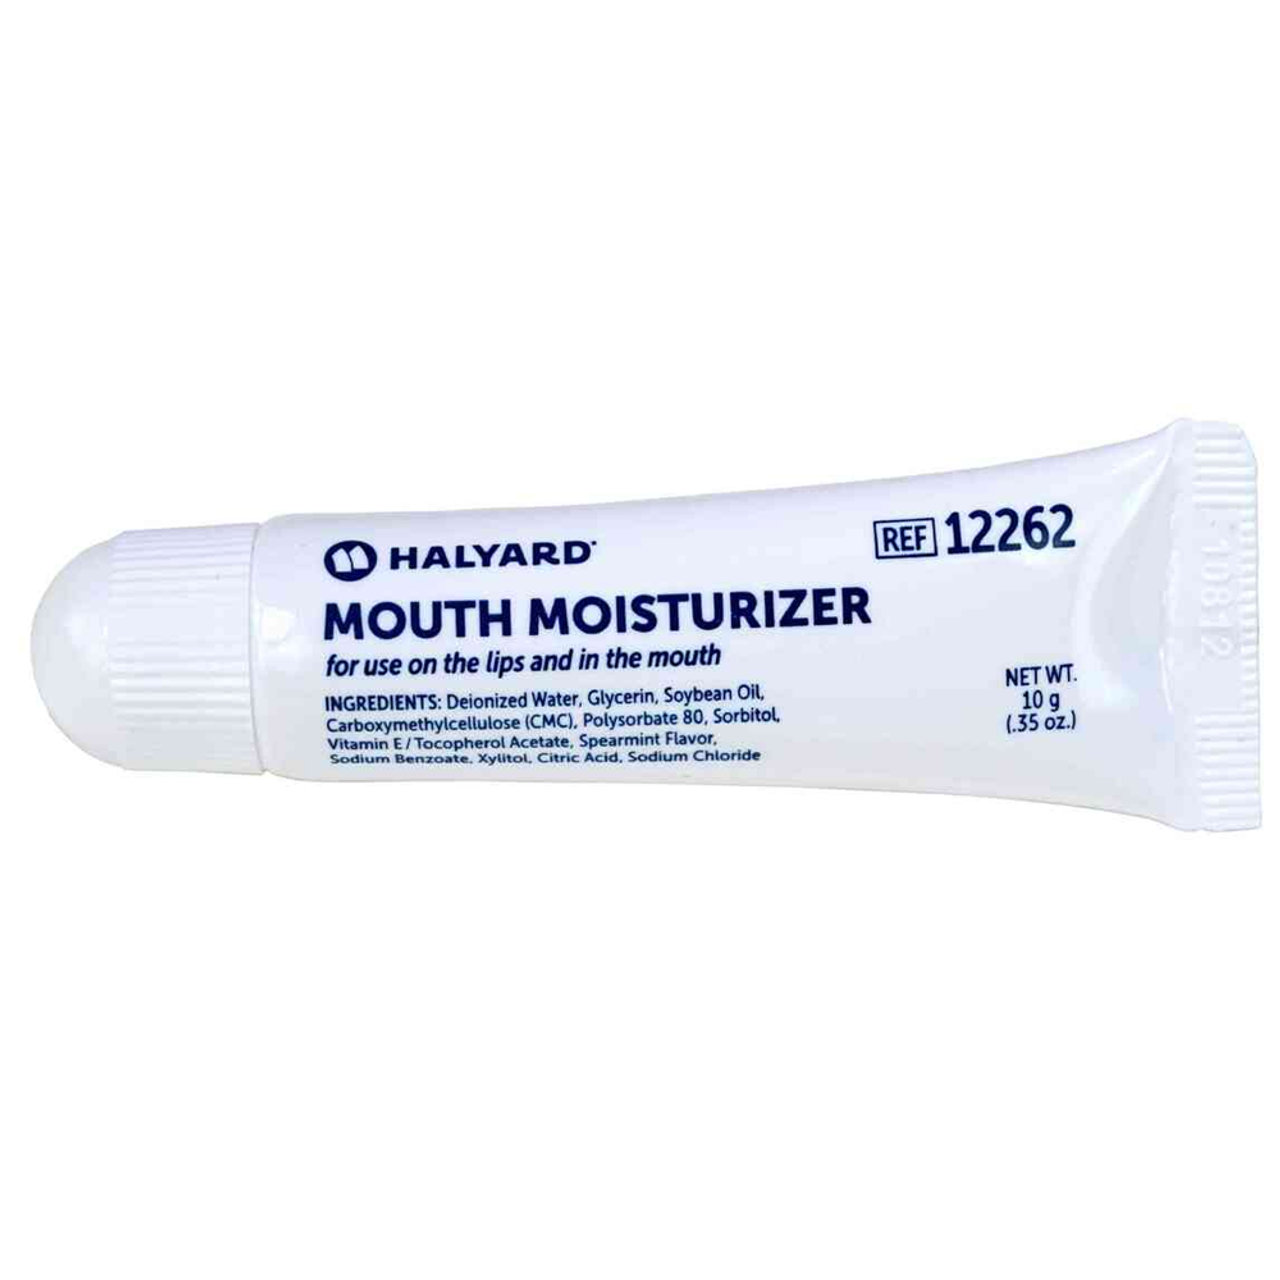 Avanos Mouth Moisturizer, .35 oz, 144/cs